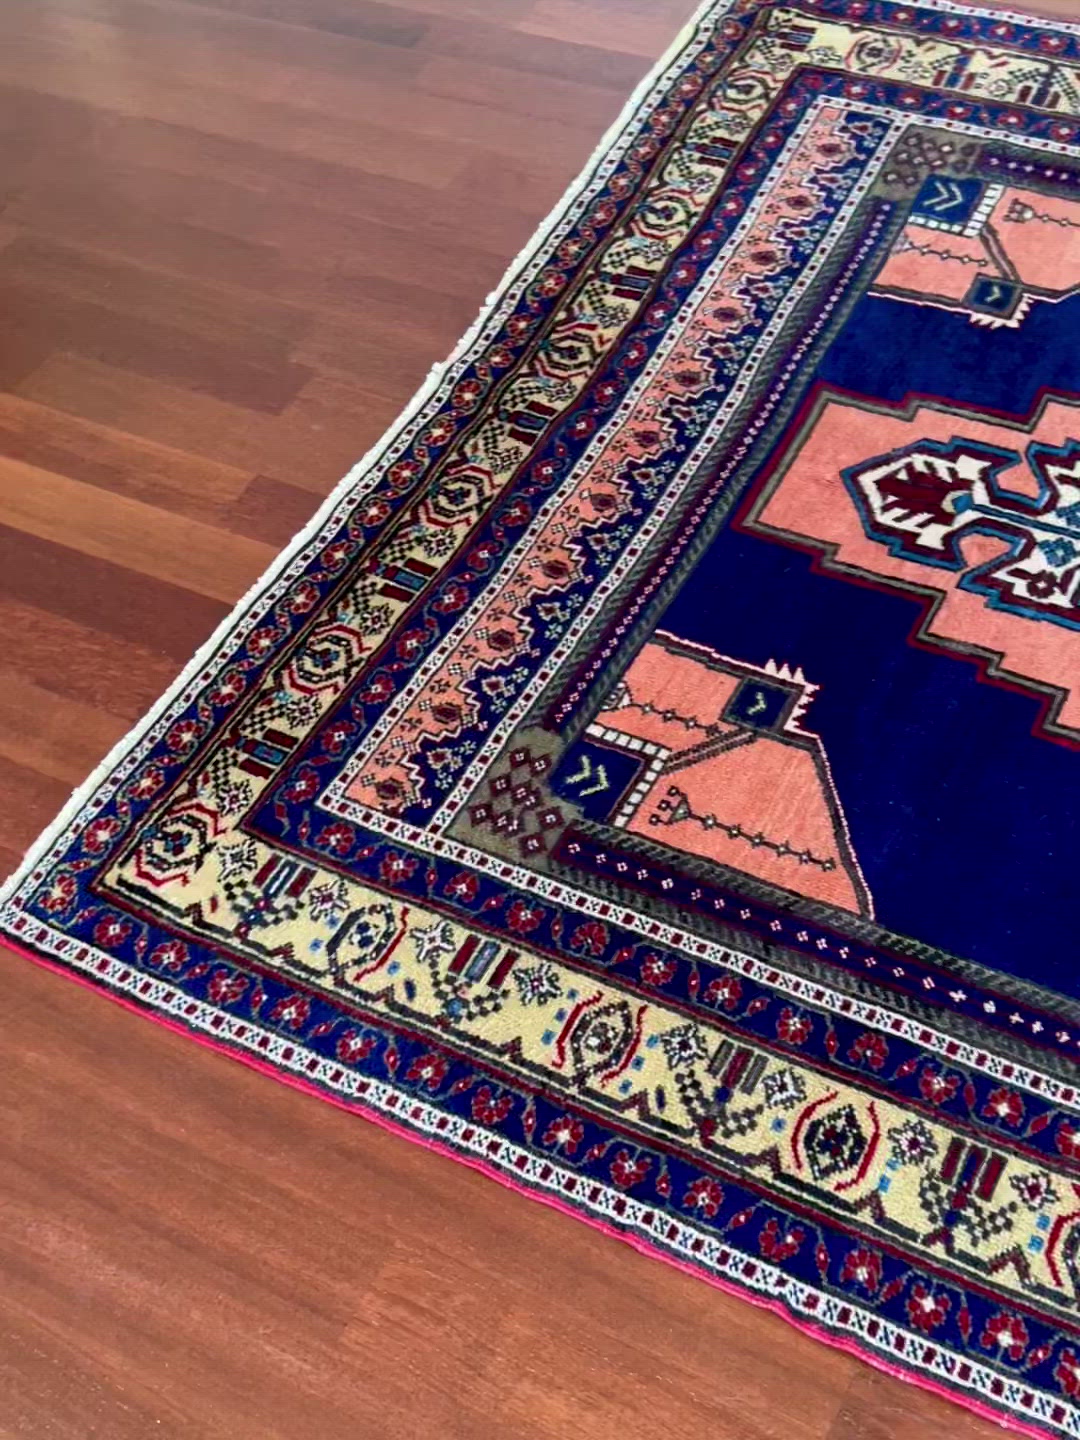 taspinar turkish rug vintage rug san francisco bay area oriental rug shop palo alto berkeley rug shopping buy vintage rug online california turkish rug shop